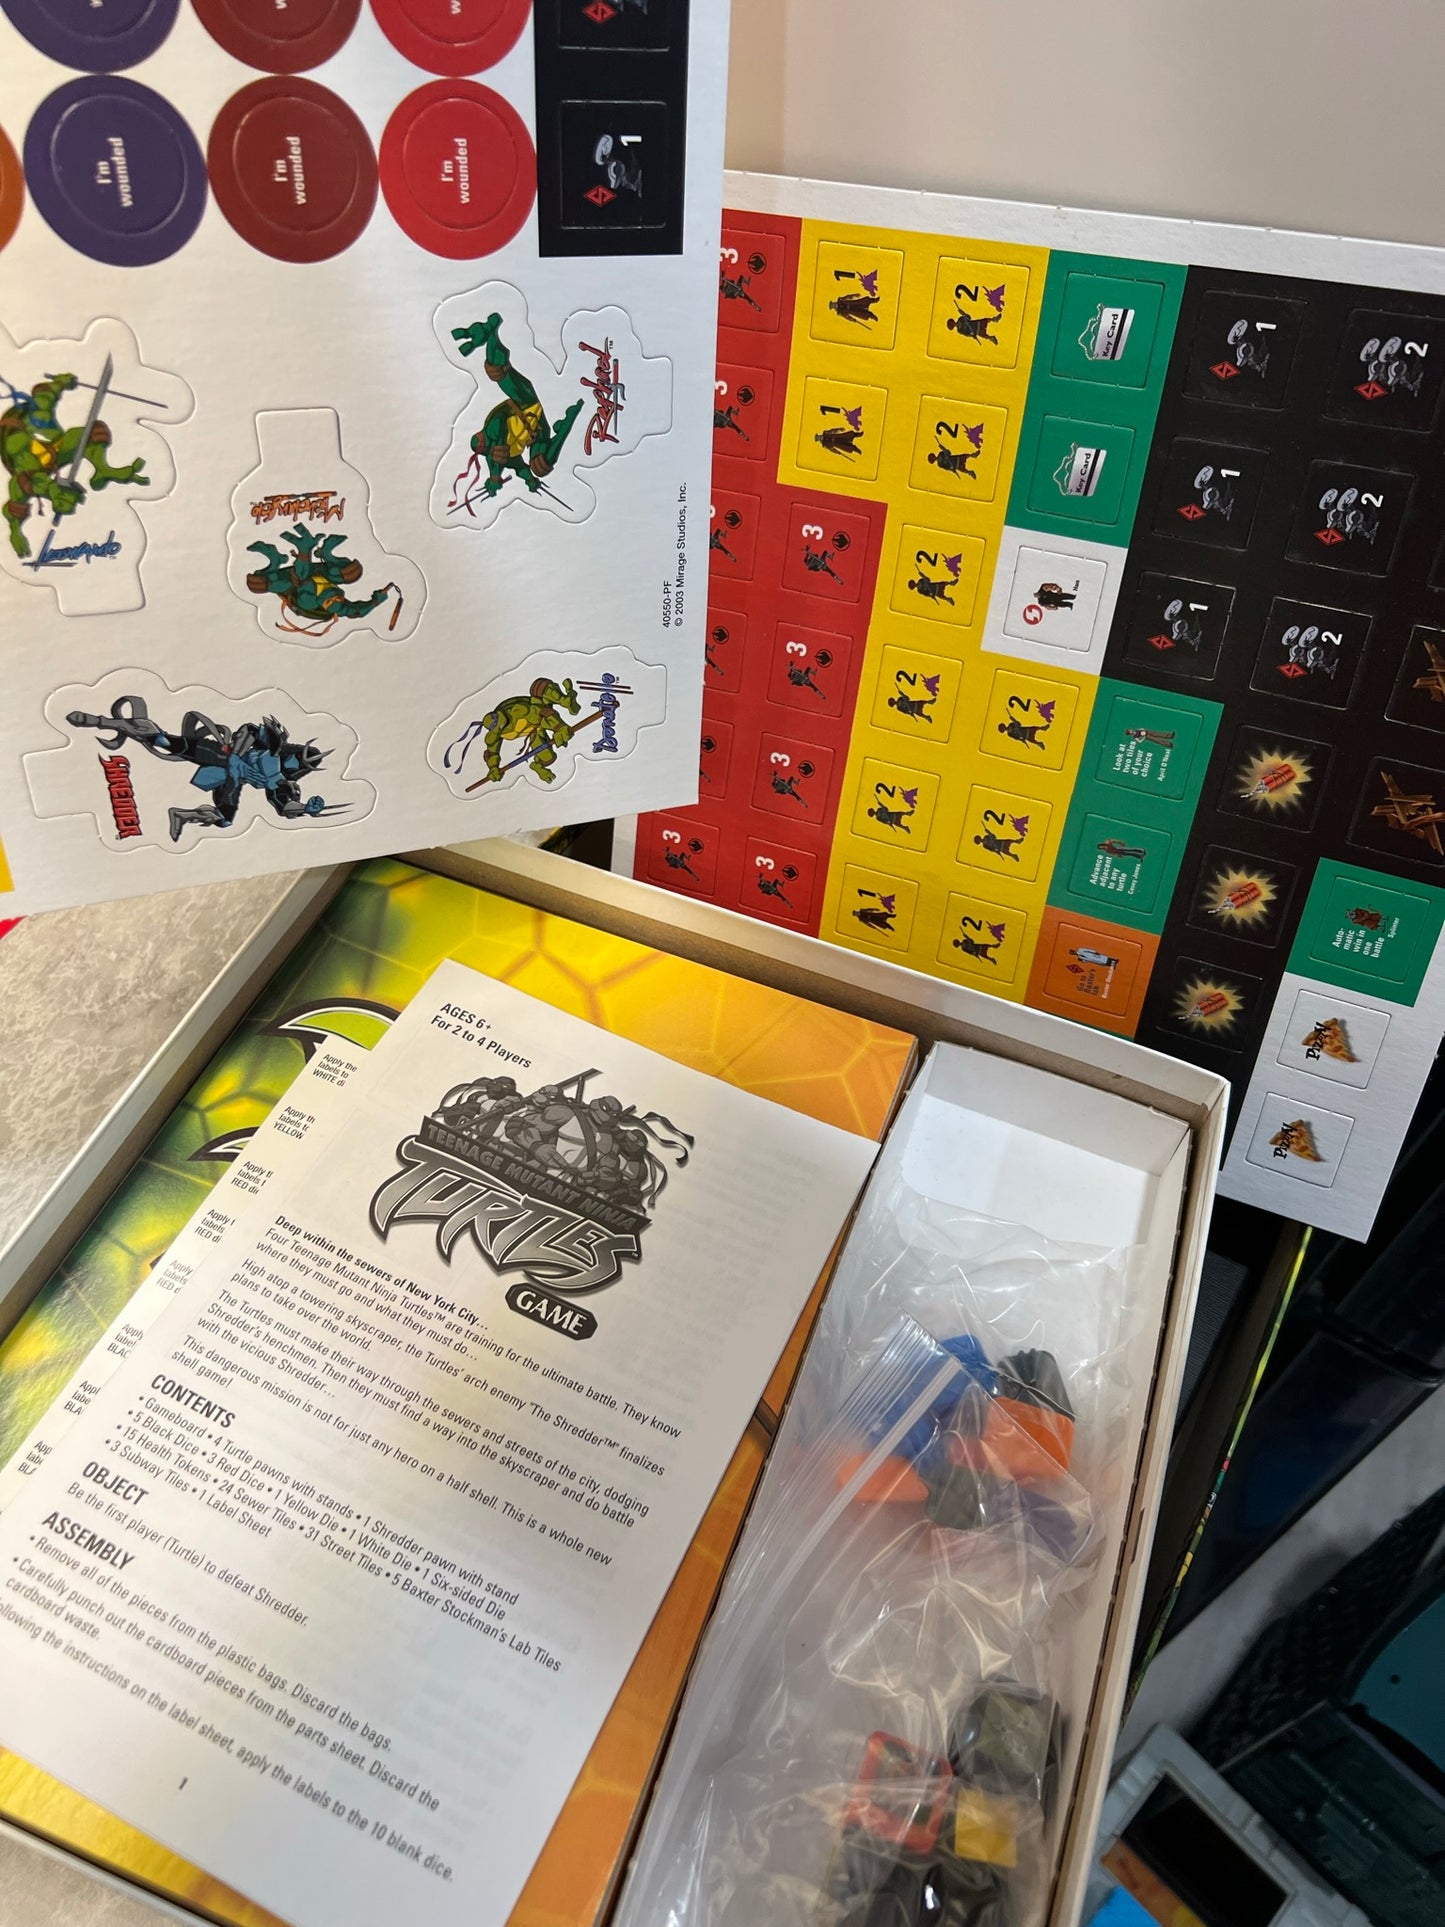 Teenage Mutant Ninja Turtles Board Game Milton Bradley - Some pieces still new